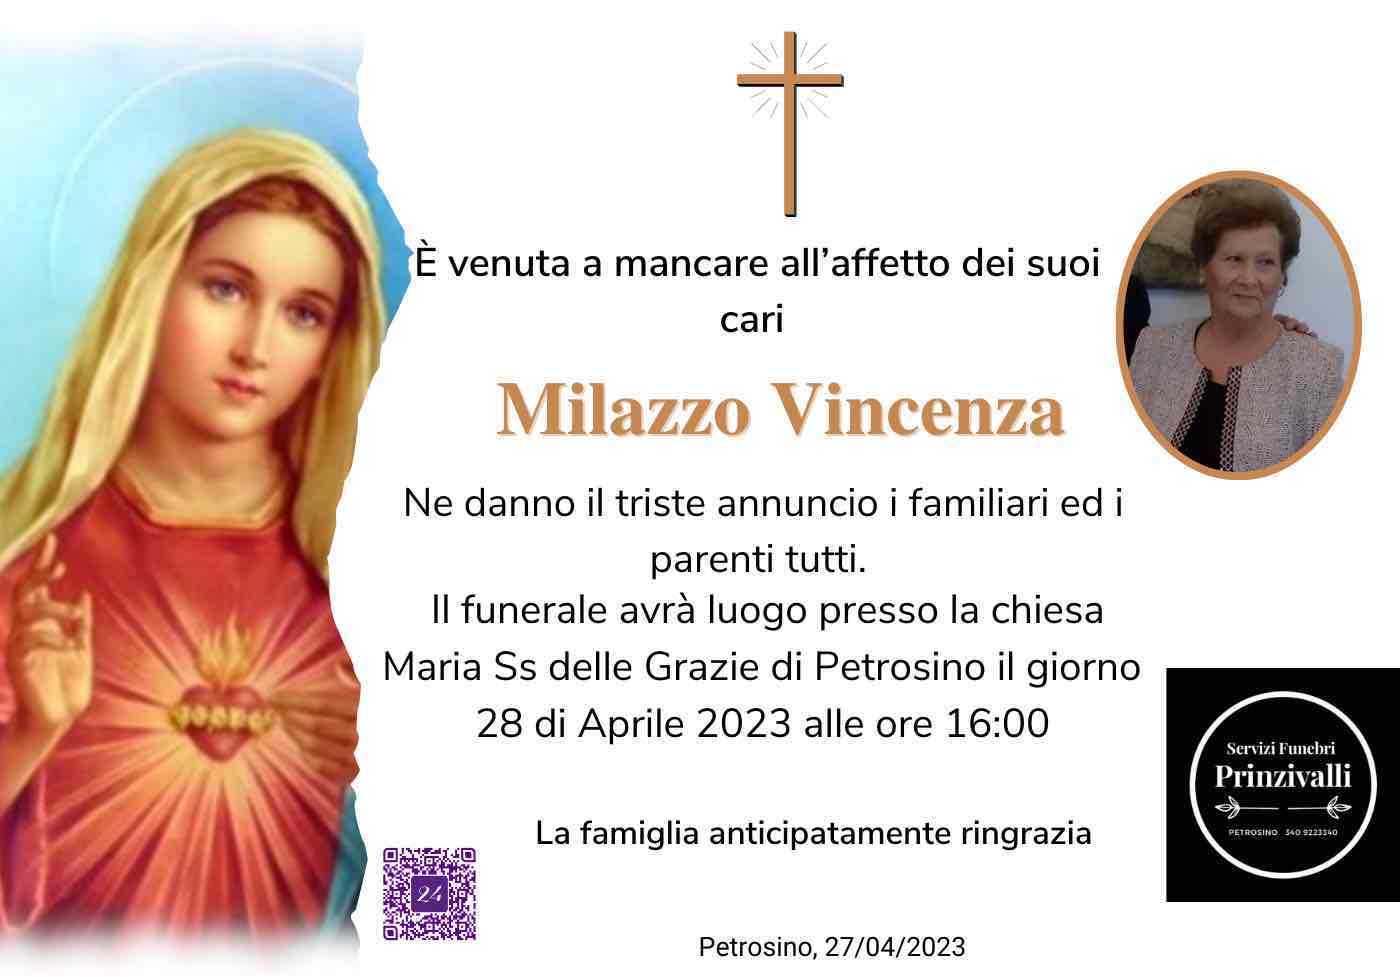 Vincenza Milazzo